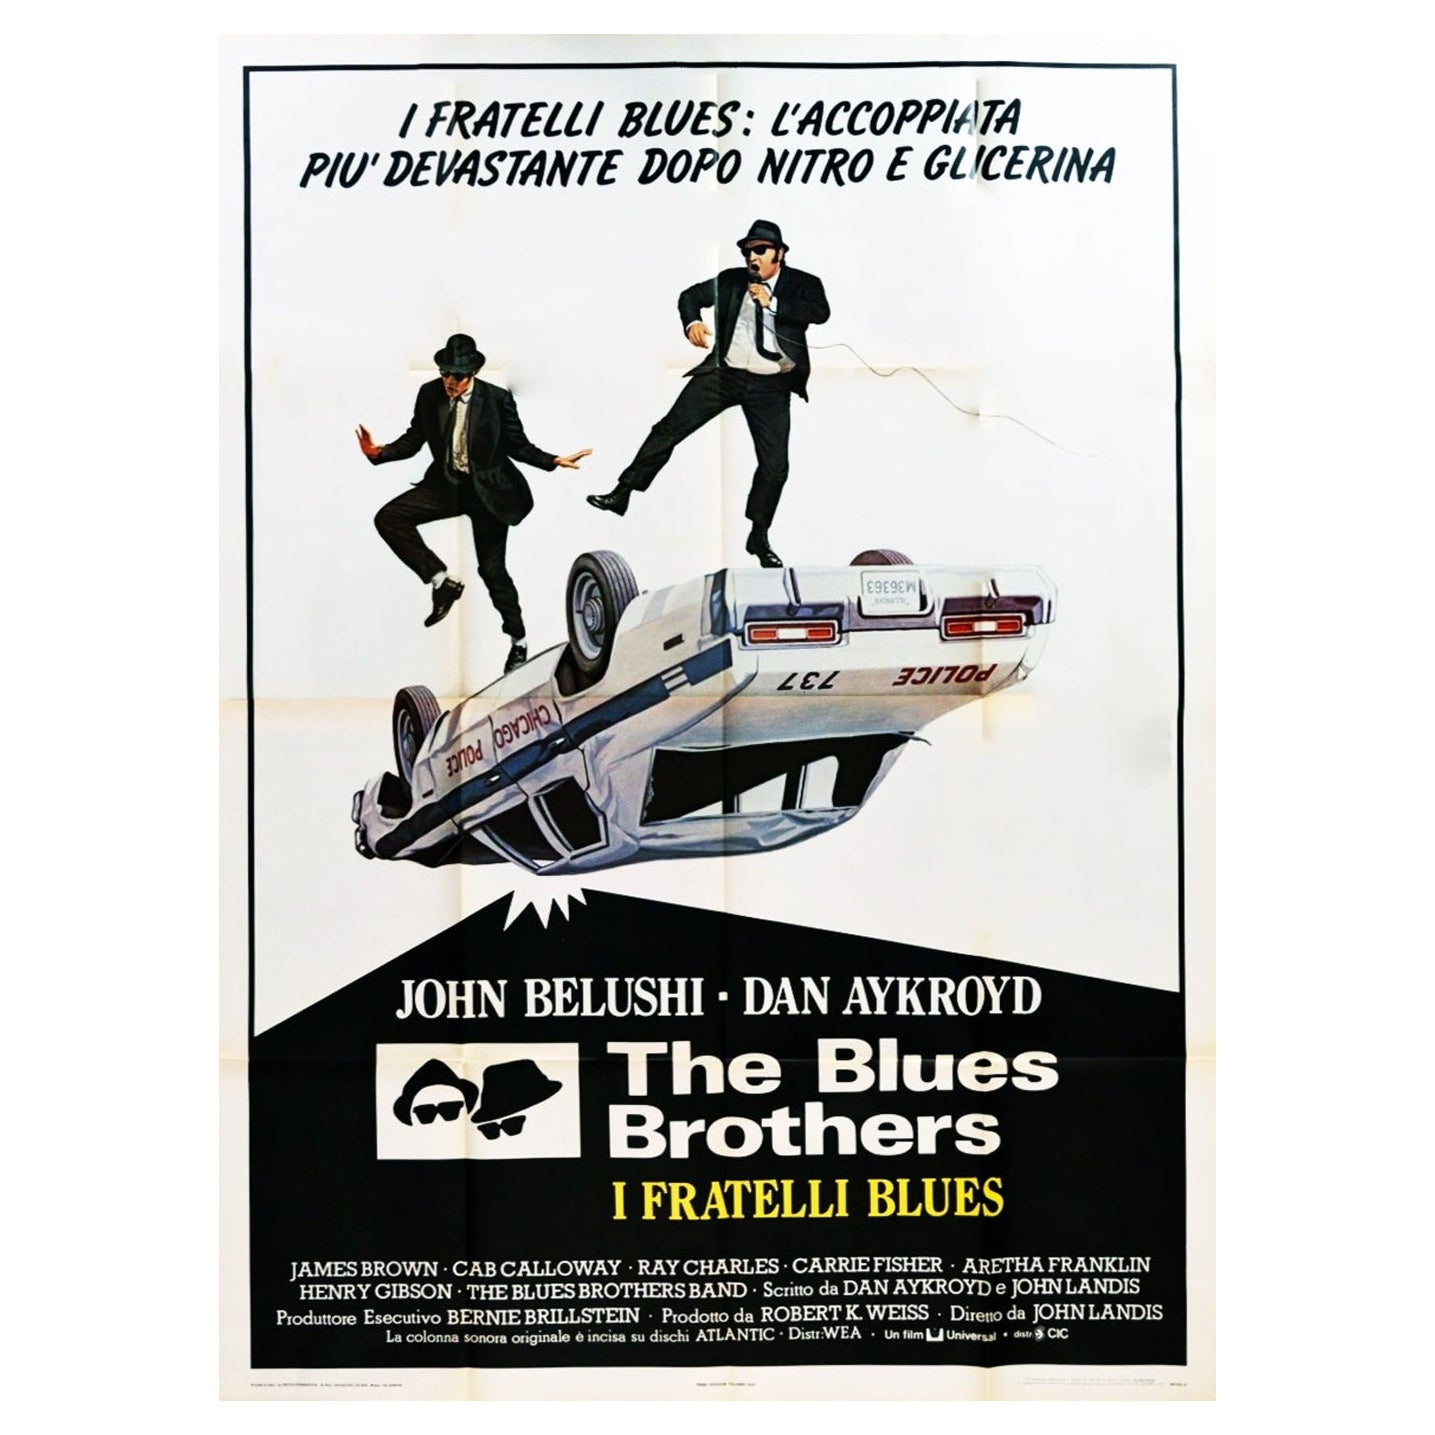 St. Louis Blues'' poster 1958 Weekender Tote Bag by Stars on Art